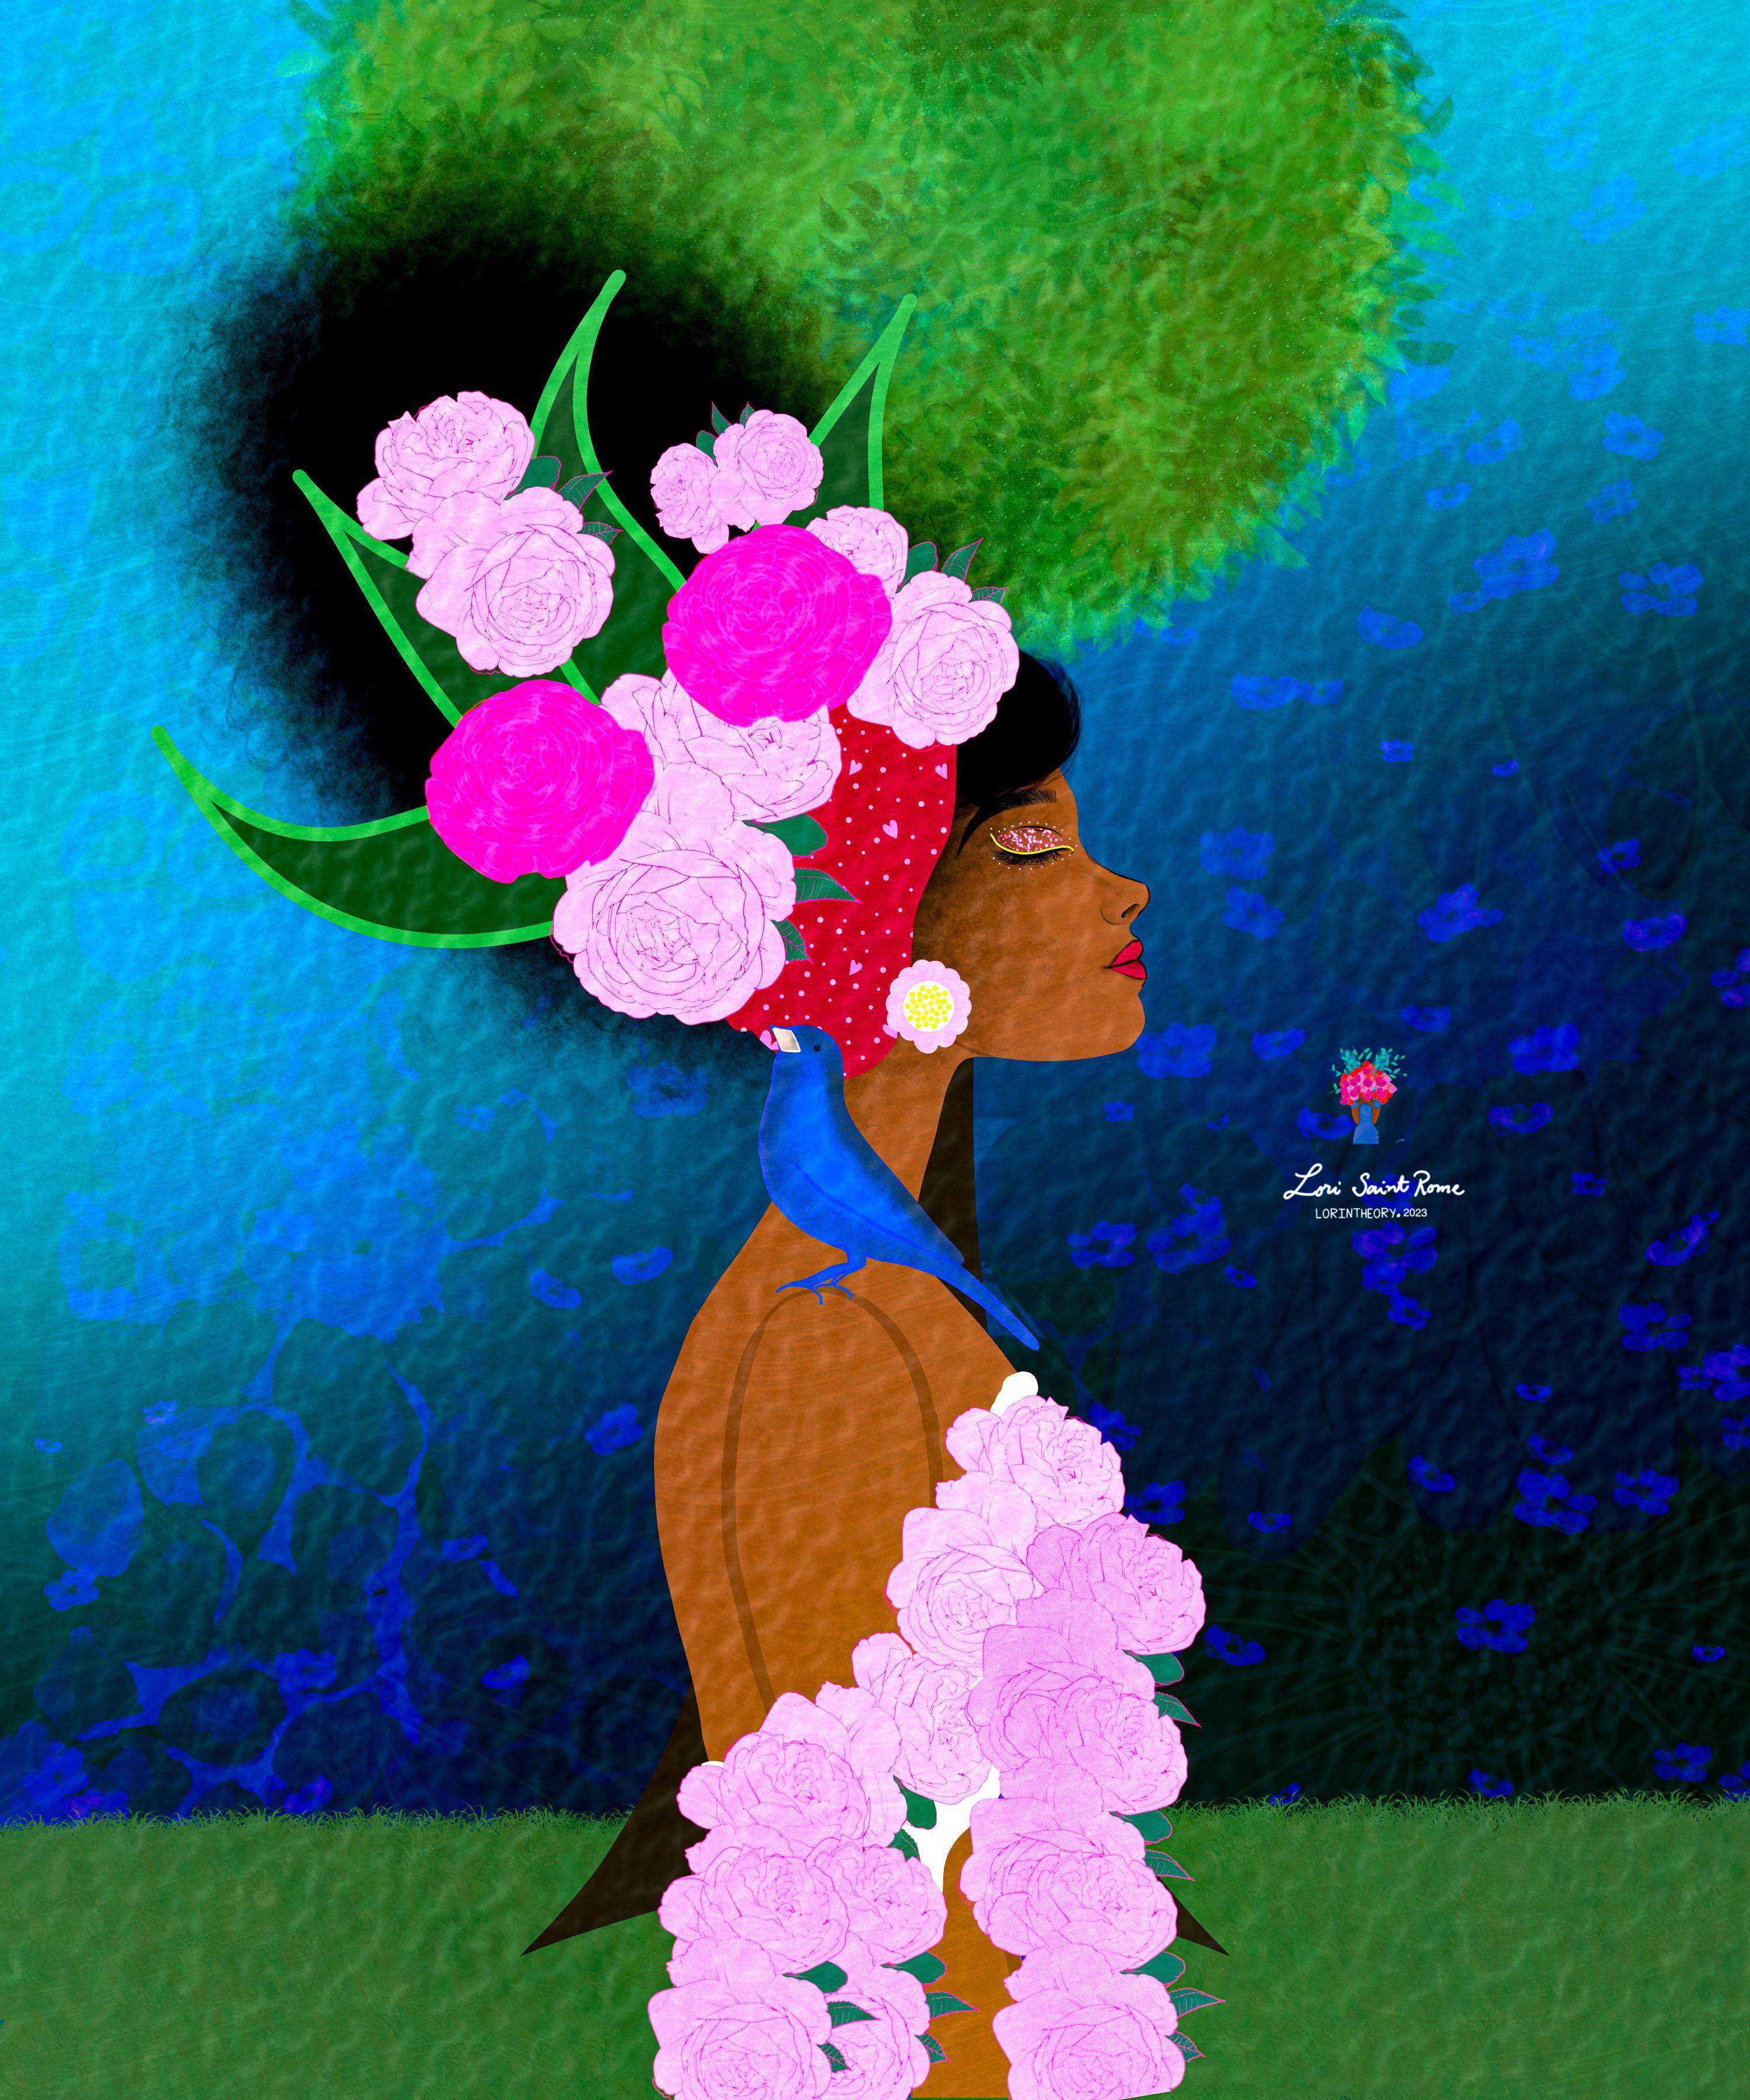 Colorful Afro Wall Art, Blackart, Contemporary art, feminine art, Black women's art